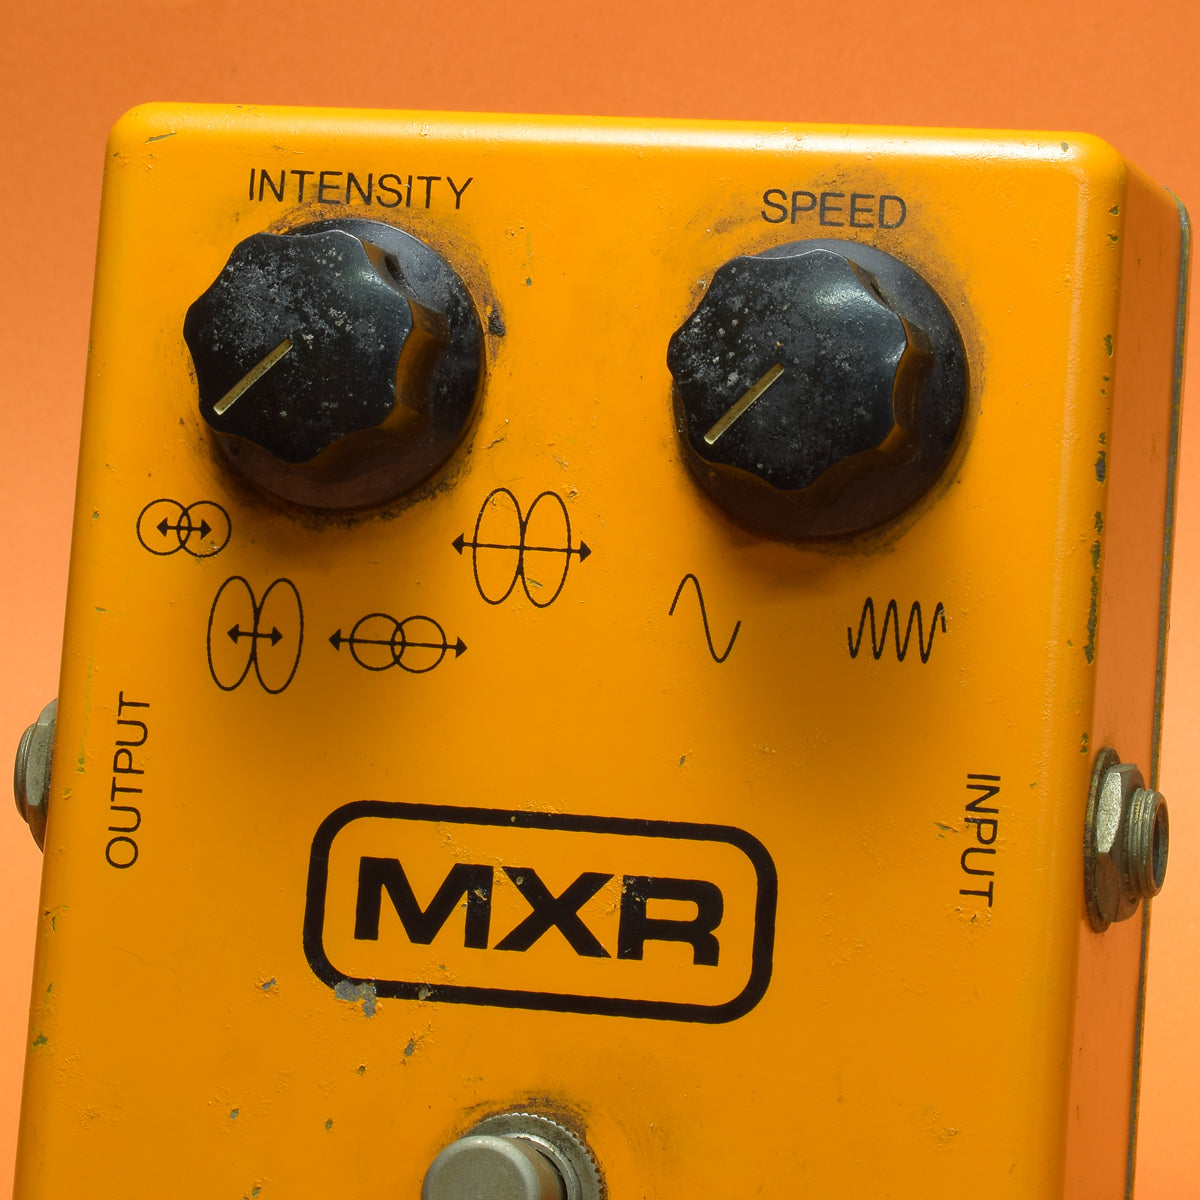 [SN 7017288] USED MXR MXR / 1977 phase 100 [20]